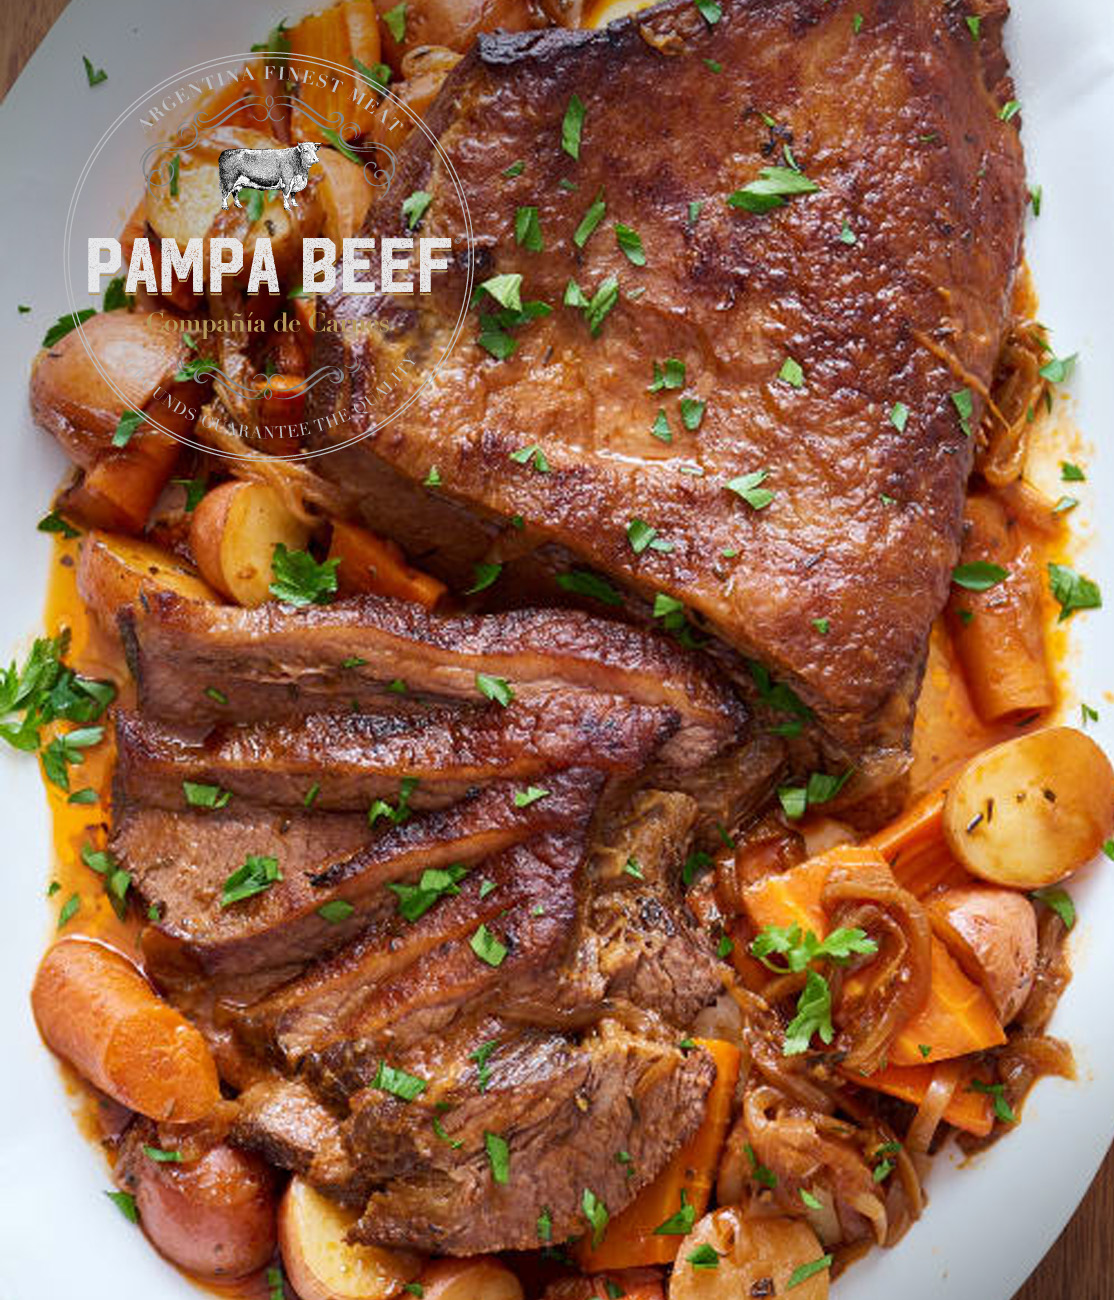 Pampa Beef Compañia de Carnes